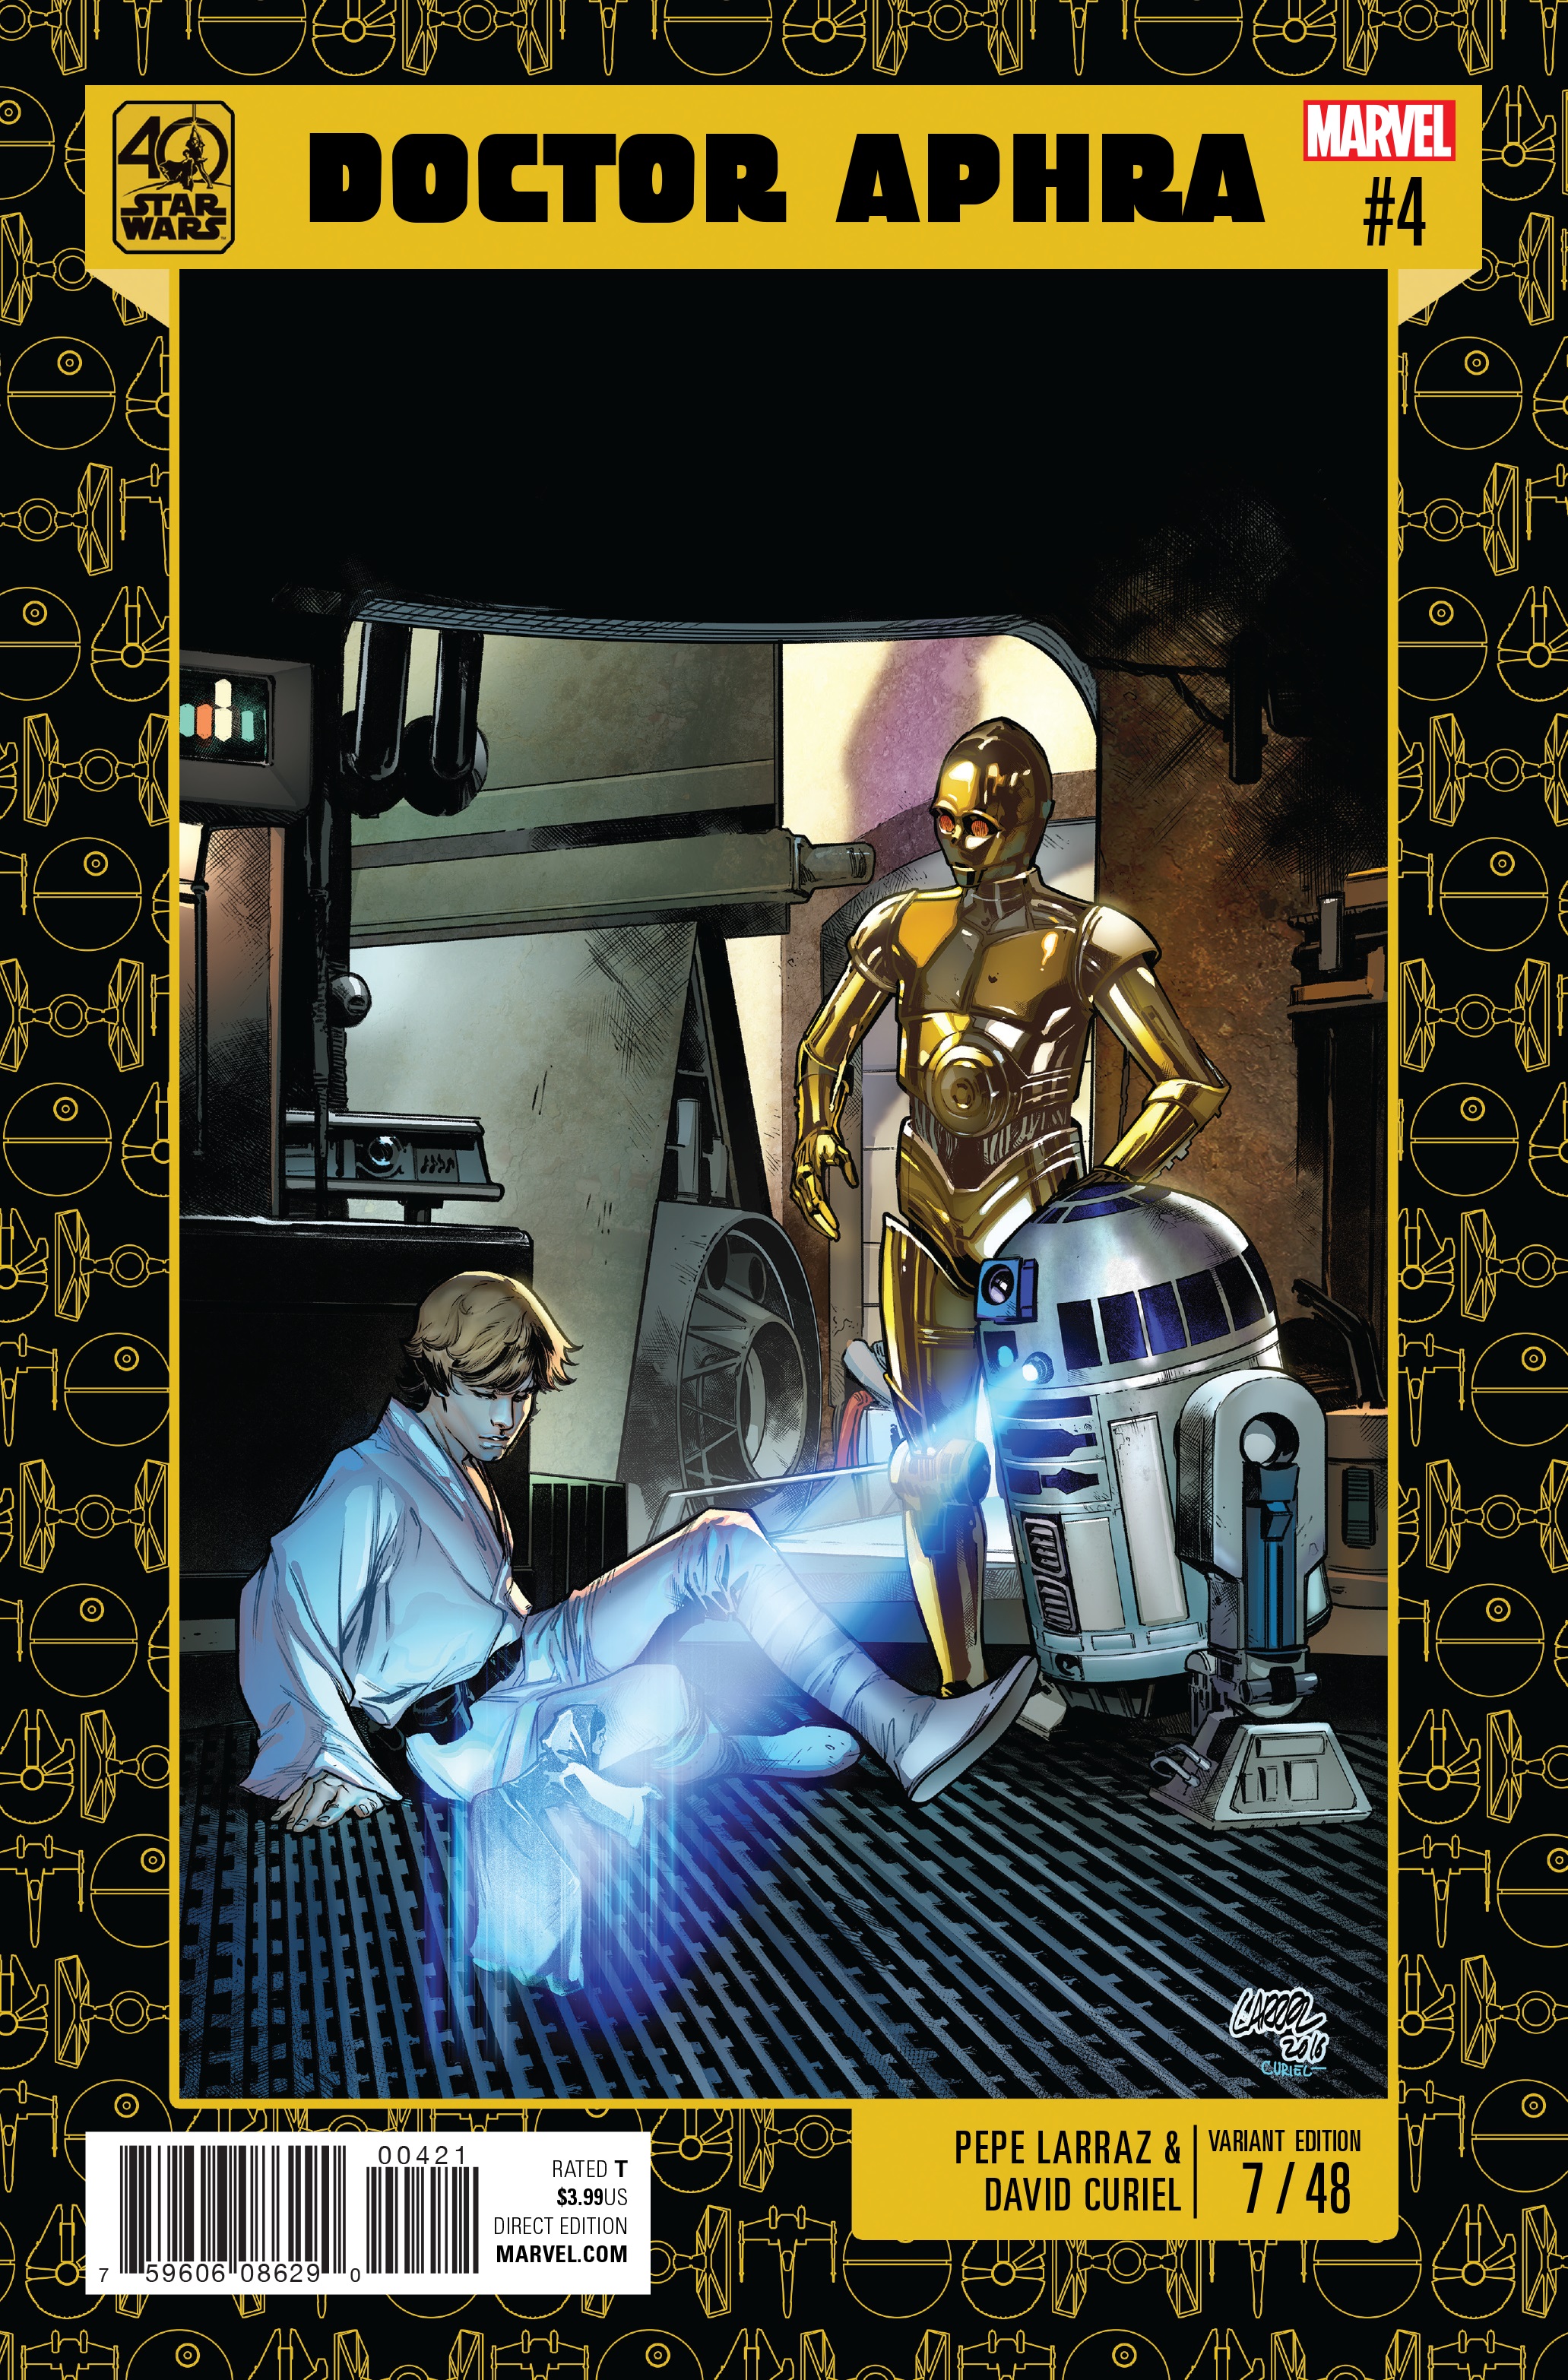 Doctor Aphra #4 (Pepe Larraz Star Wars 40th Anniversary Variant CDoctor Aphra #4 (Pepe Larraz Star Wars 40th Anniversary Variant Cover) (01.02.2017)over) (01.02.2017)